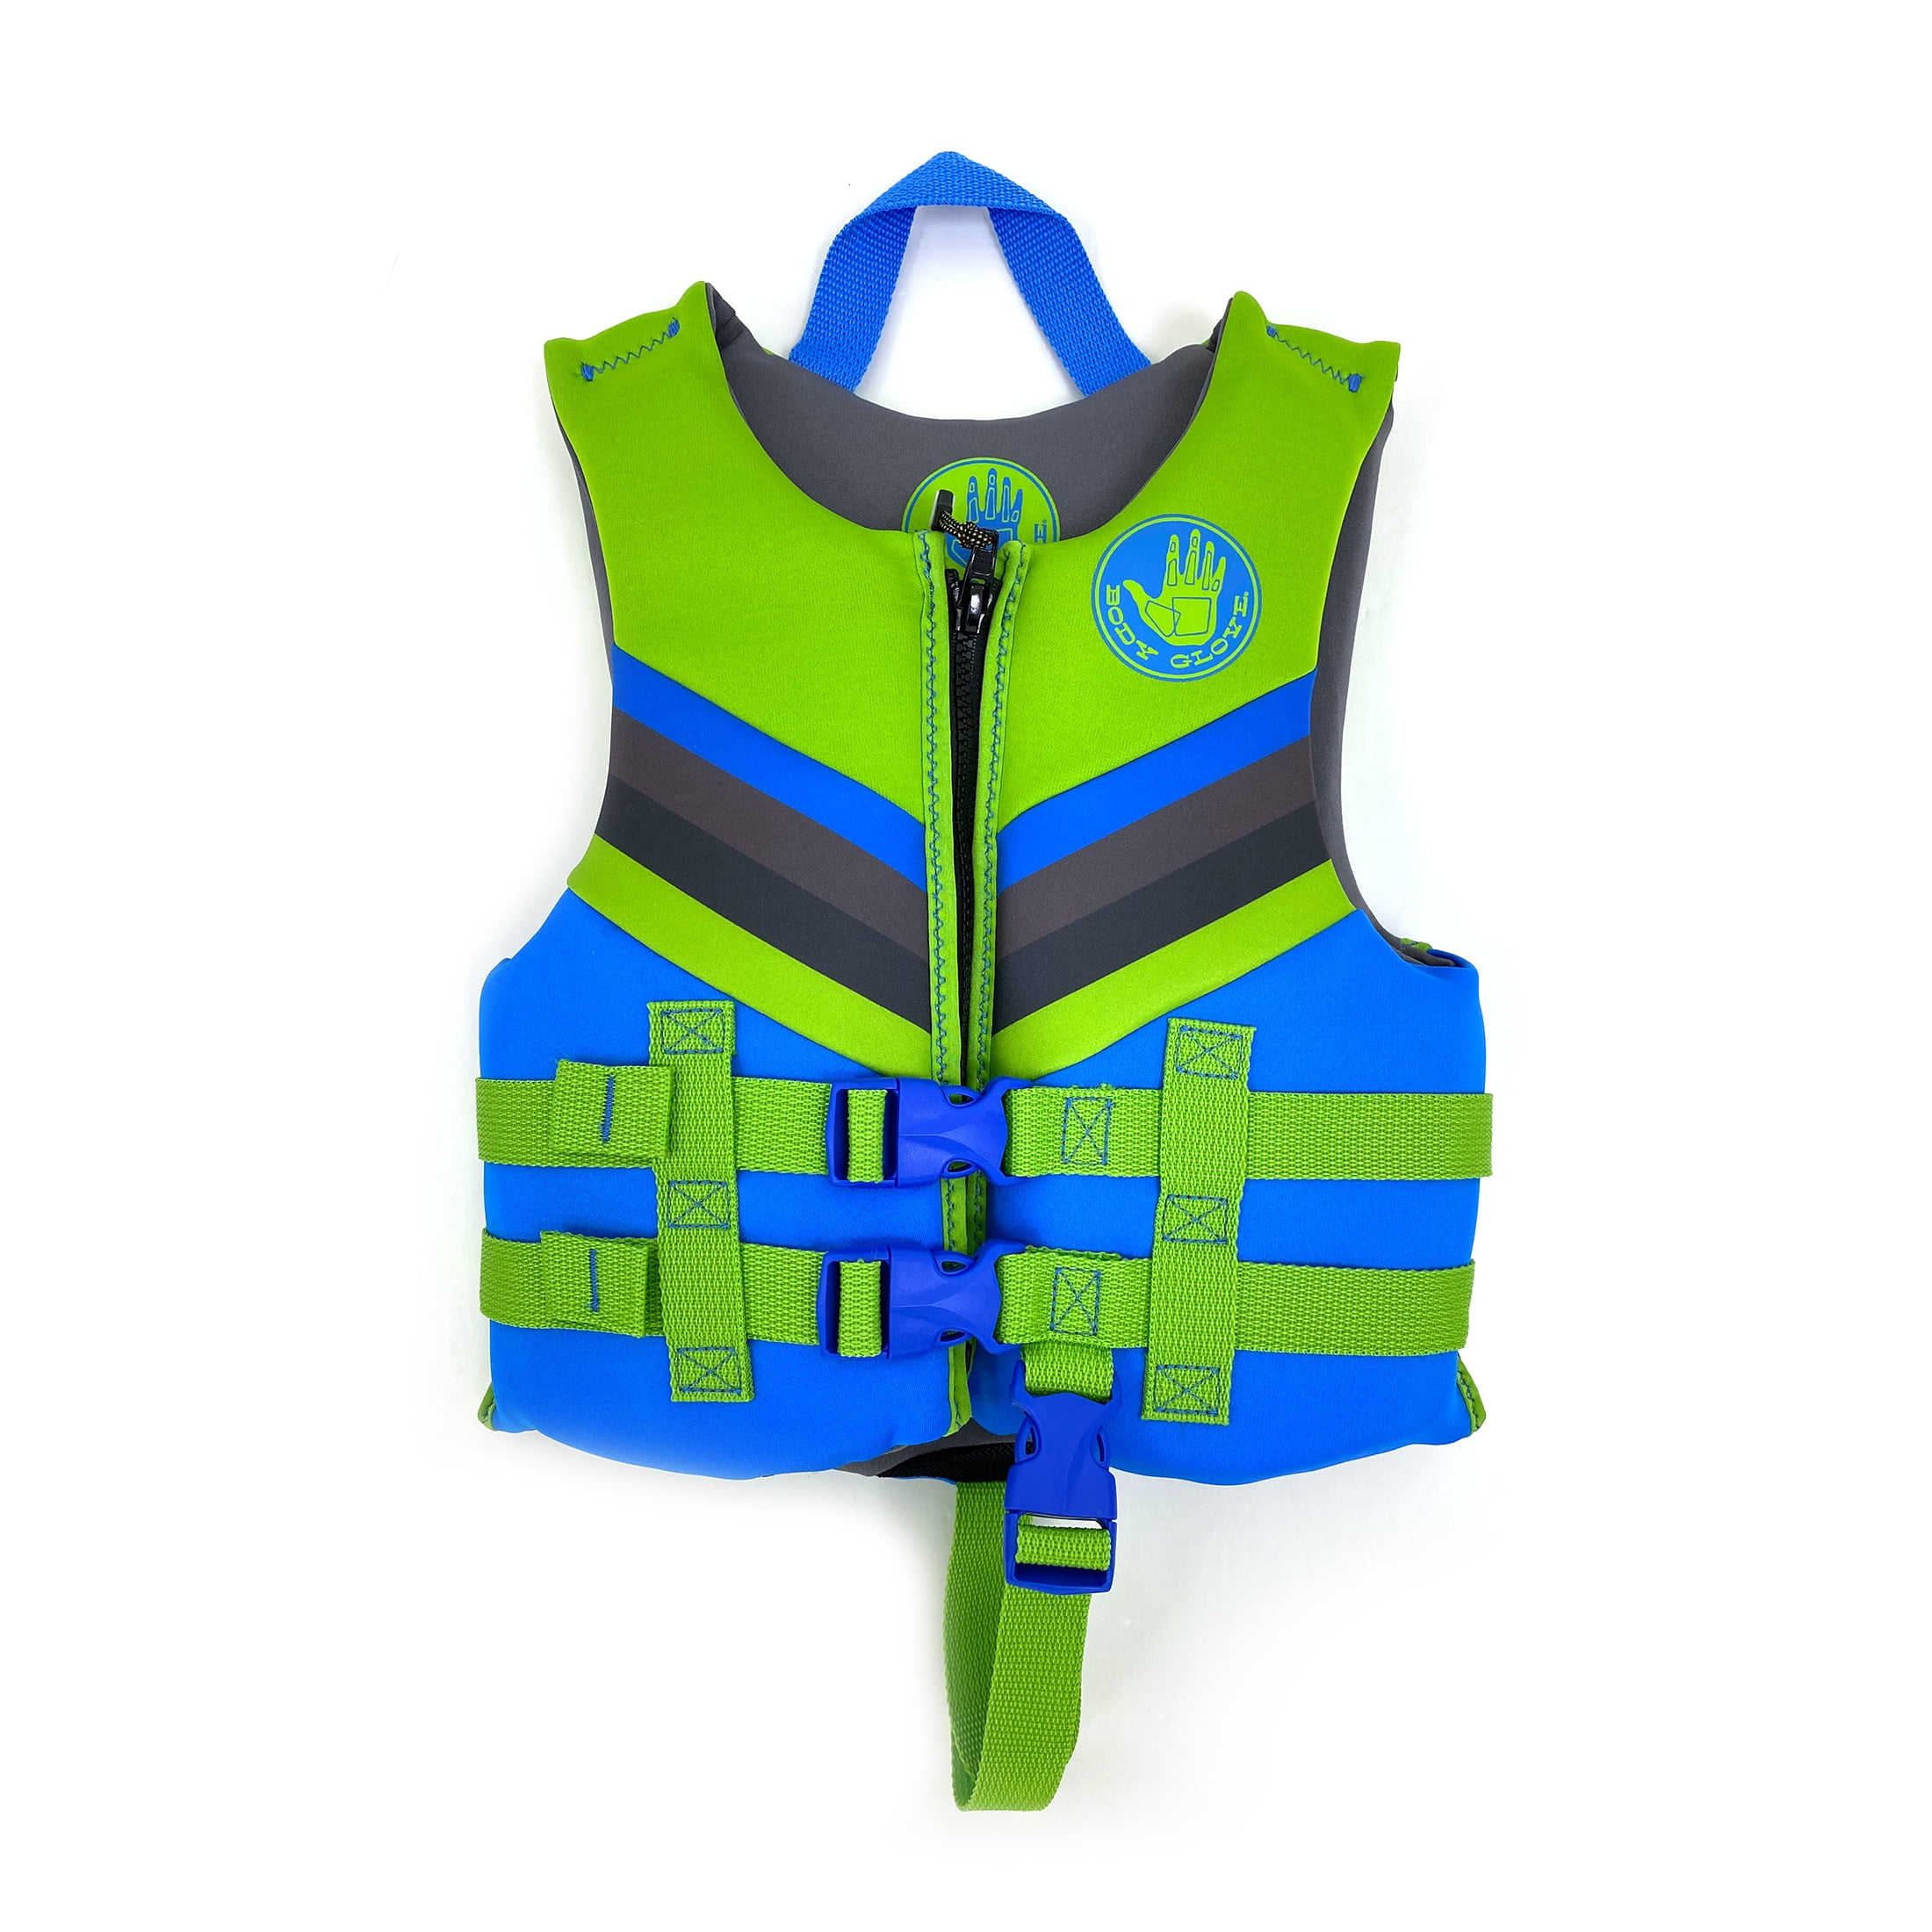 Children's Inflatable Swim Vest Life Jacket Kids Swimming Boating Safety Jacket 